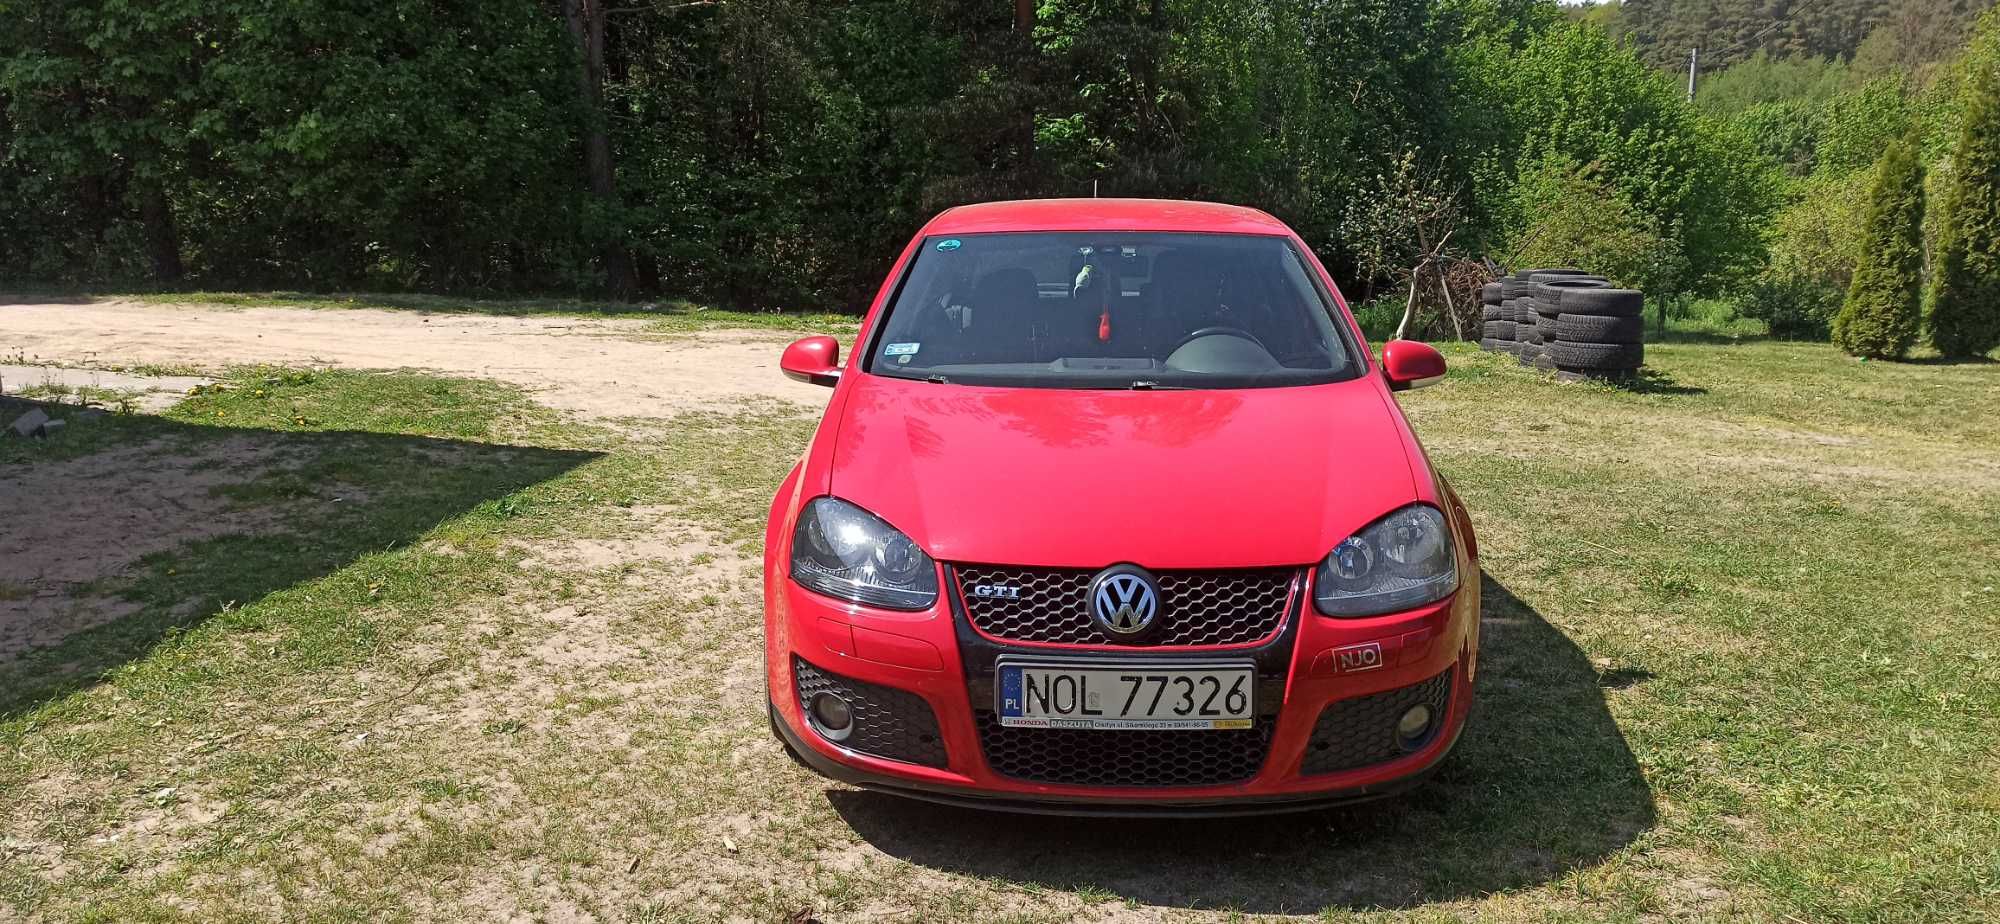 Volkswagen golf V GTI